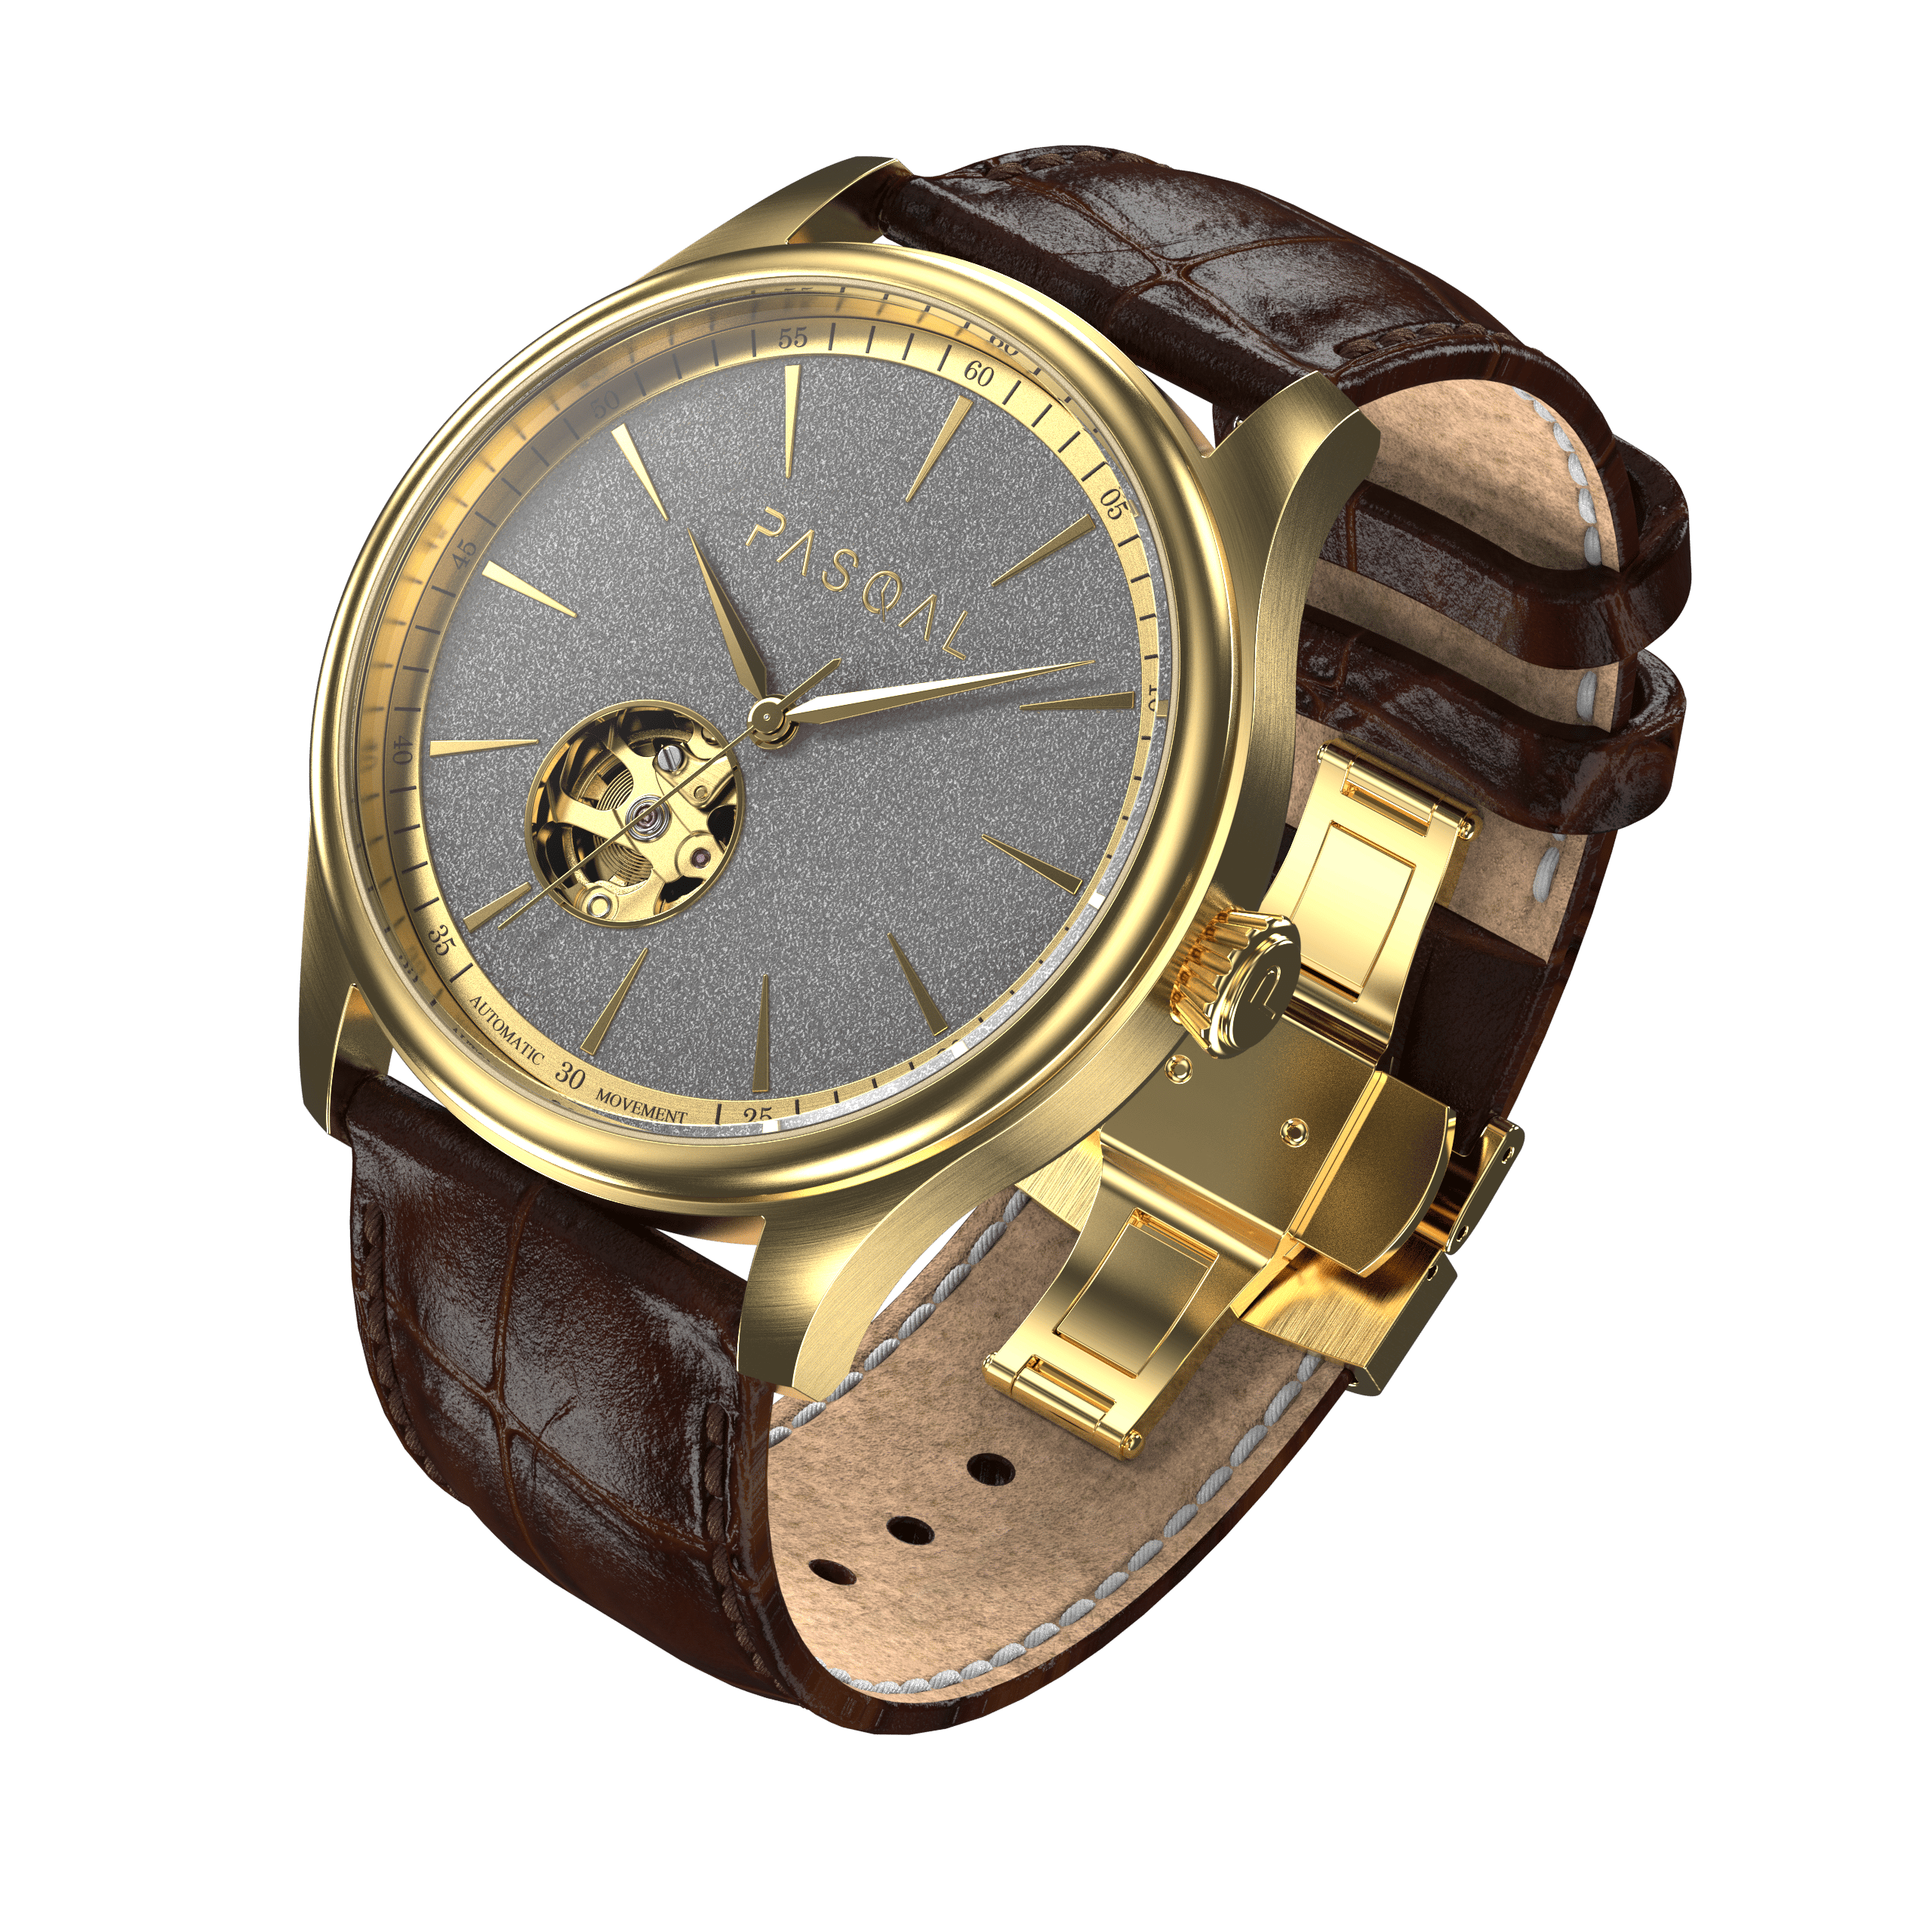 Wilhelm 42 Gold/Grey - Pasqal Watches